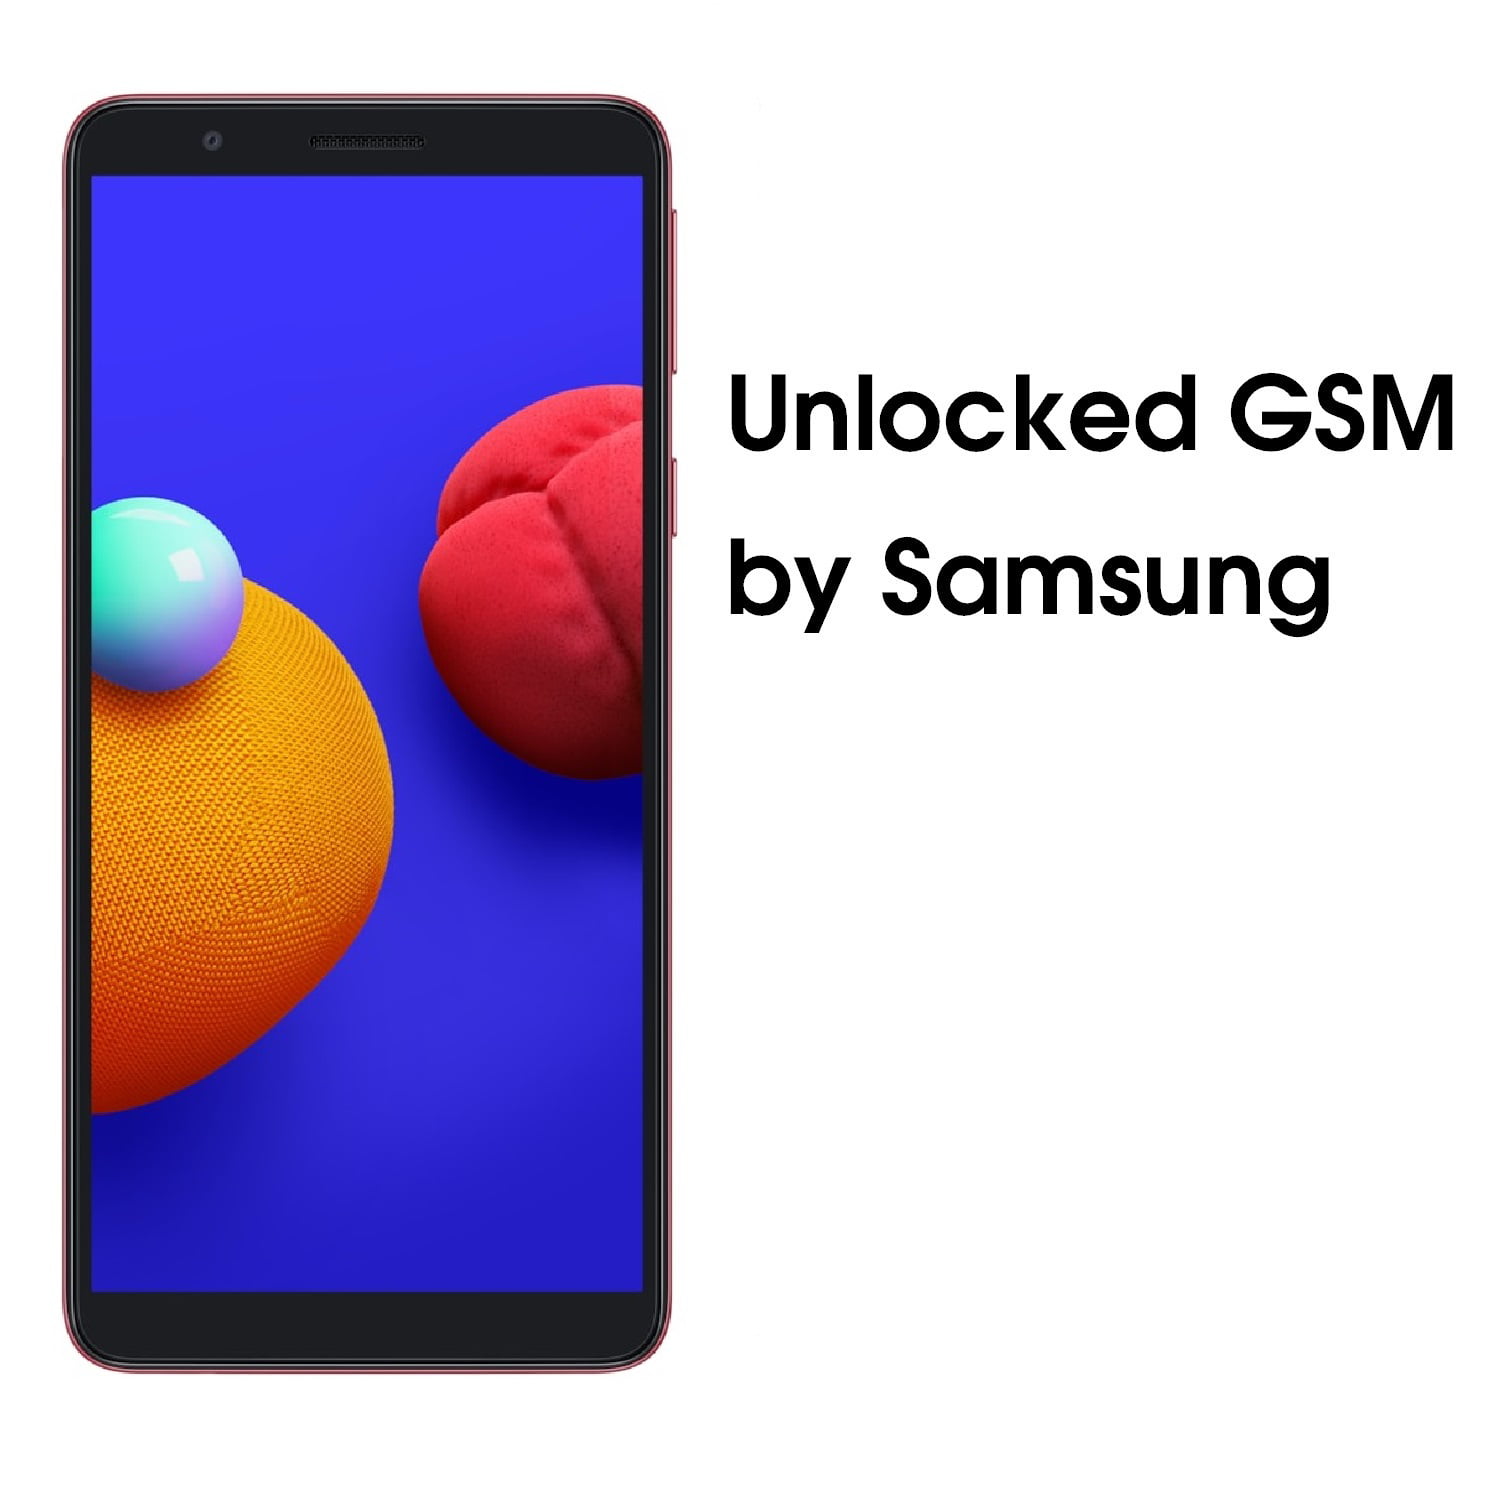 Samsung gsm